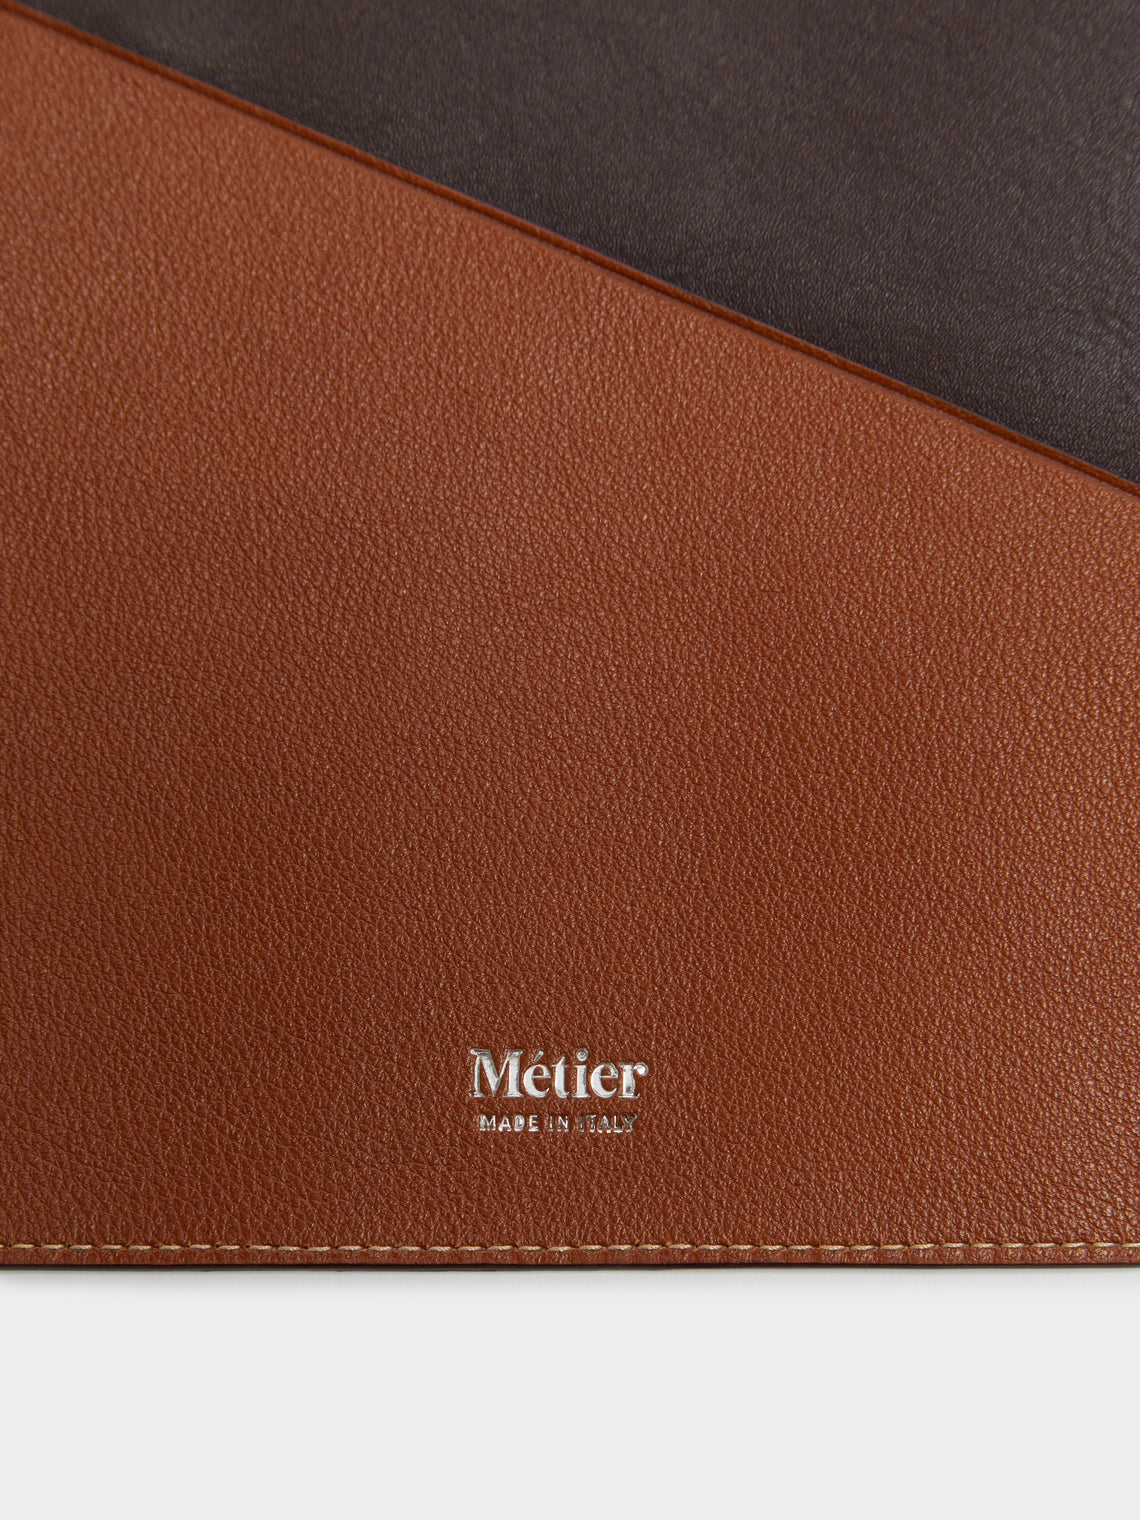 Métier - A4 Leather Document Folder - Brown - ABASK